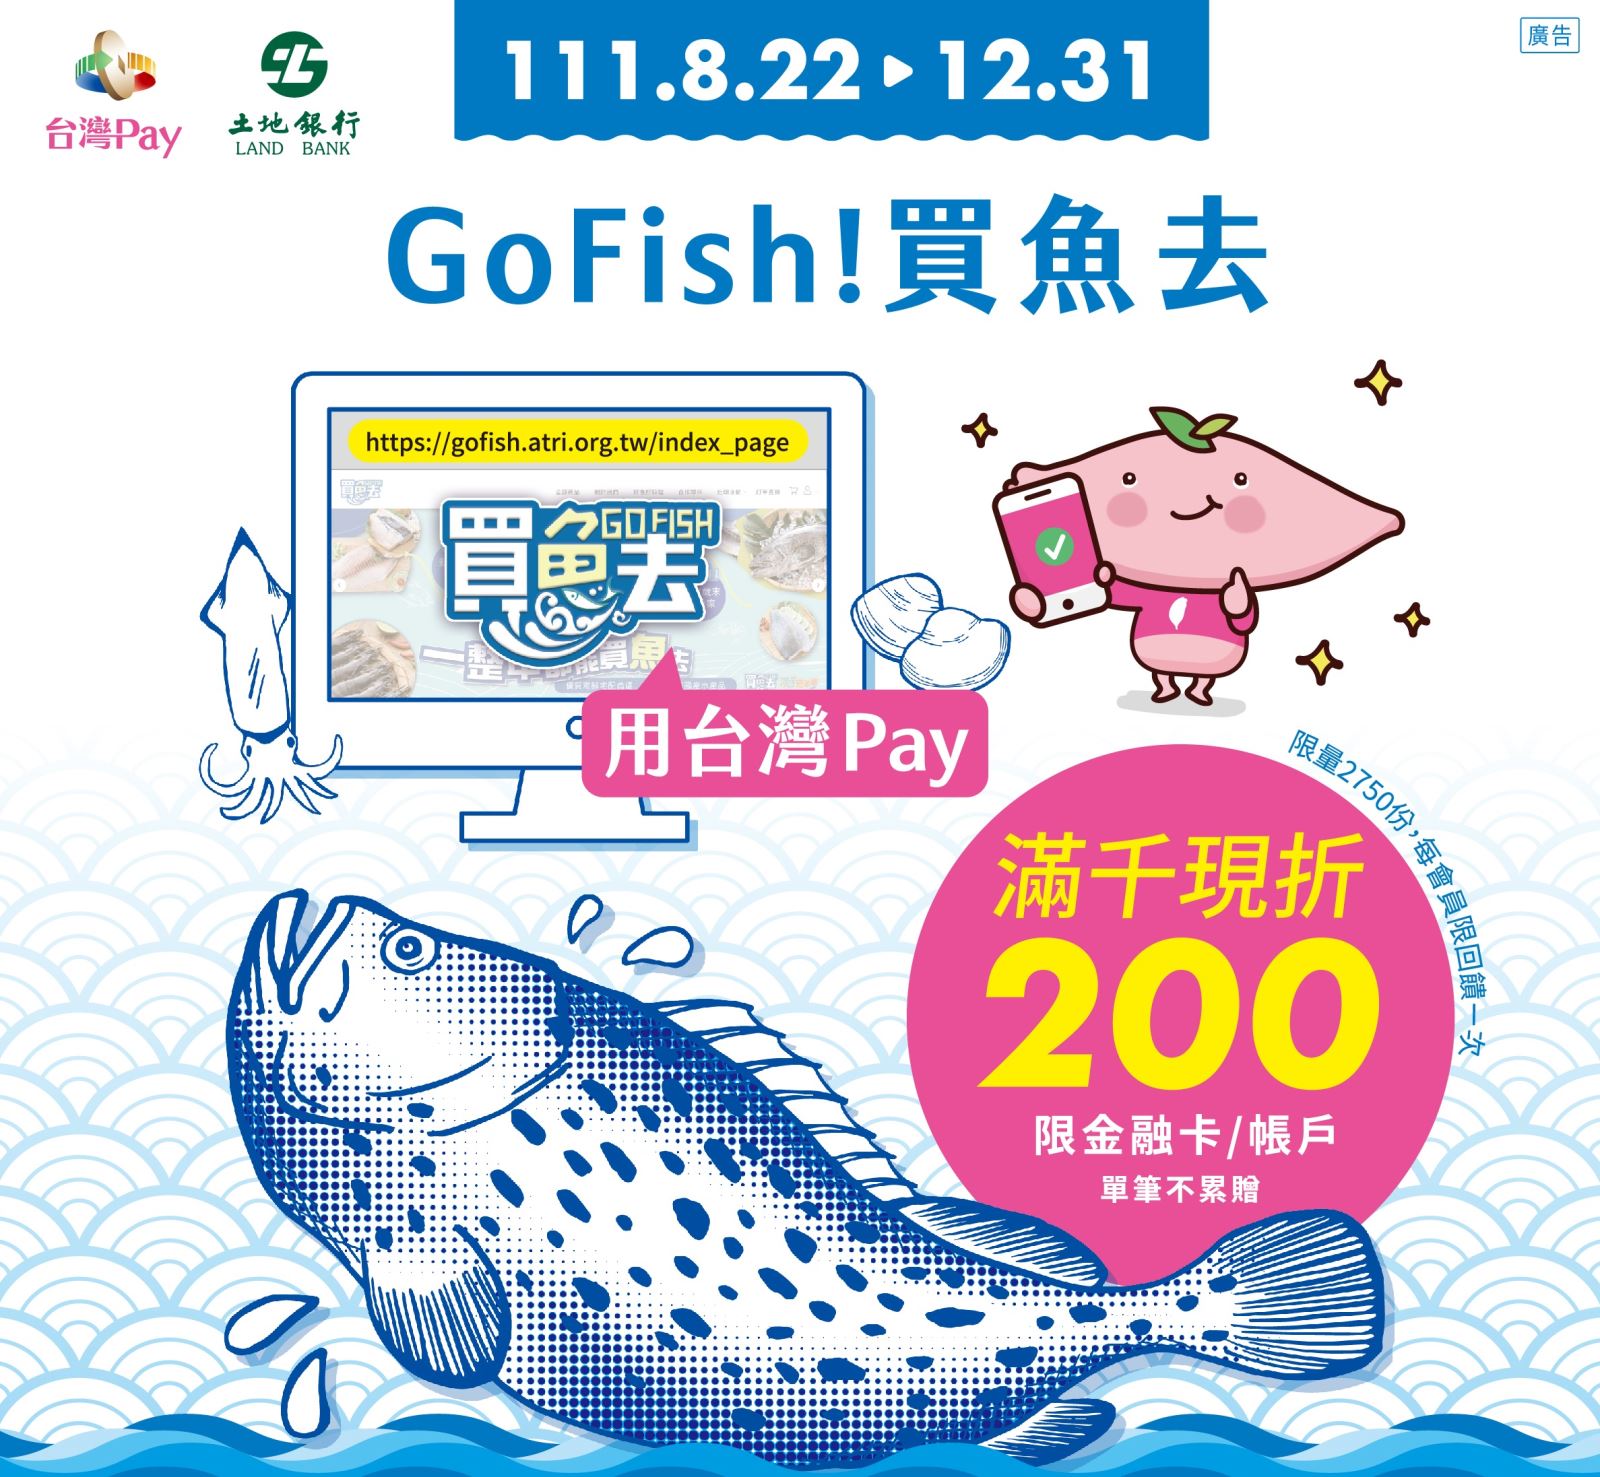 Go Fish!買魚去 用台灣Pay滿1000現折200。單筆滿新臺幣1,000 元可享現折 200 元之現金回饋(此圖片為本優惠活動主要視覺，活動內容請參考活動辦法說明文字)